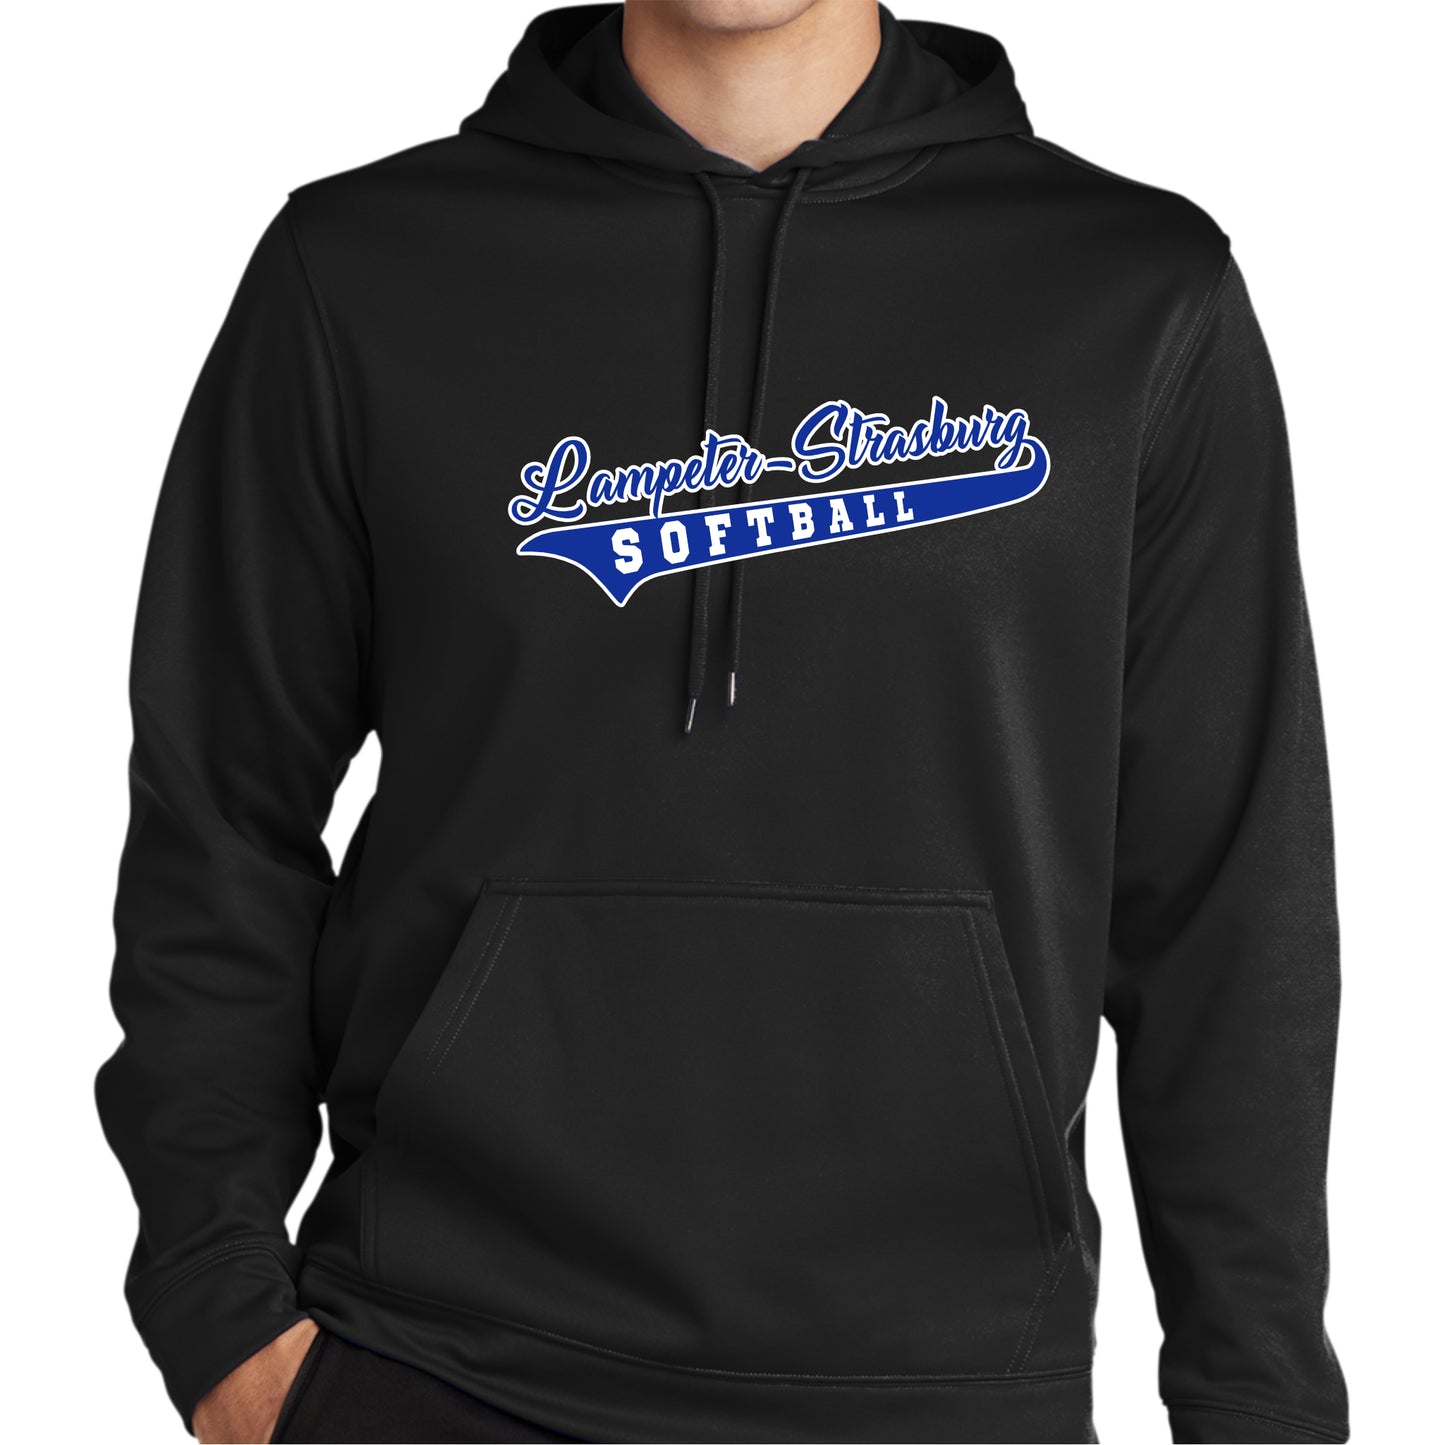 24388-29  Black Performance Hoody | Softball Script Logo